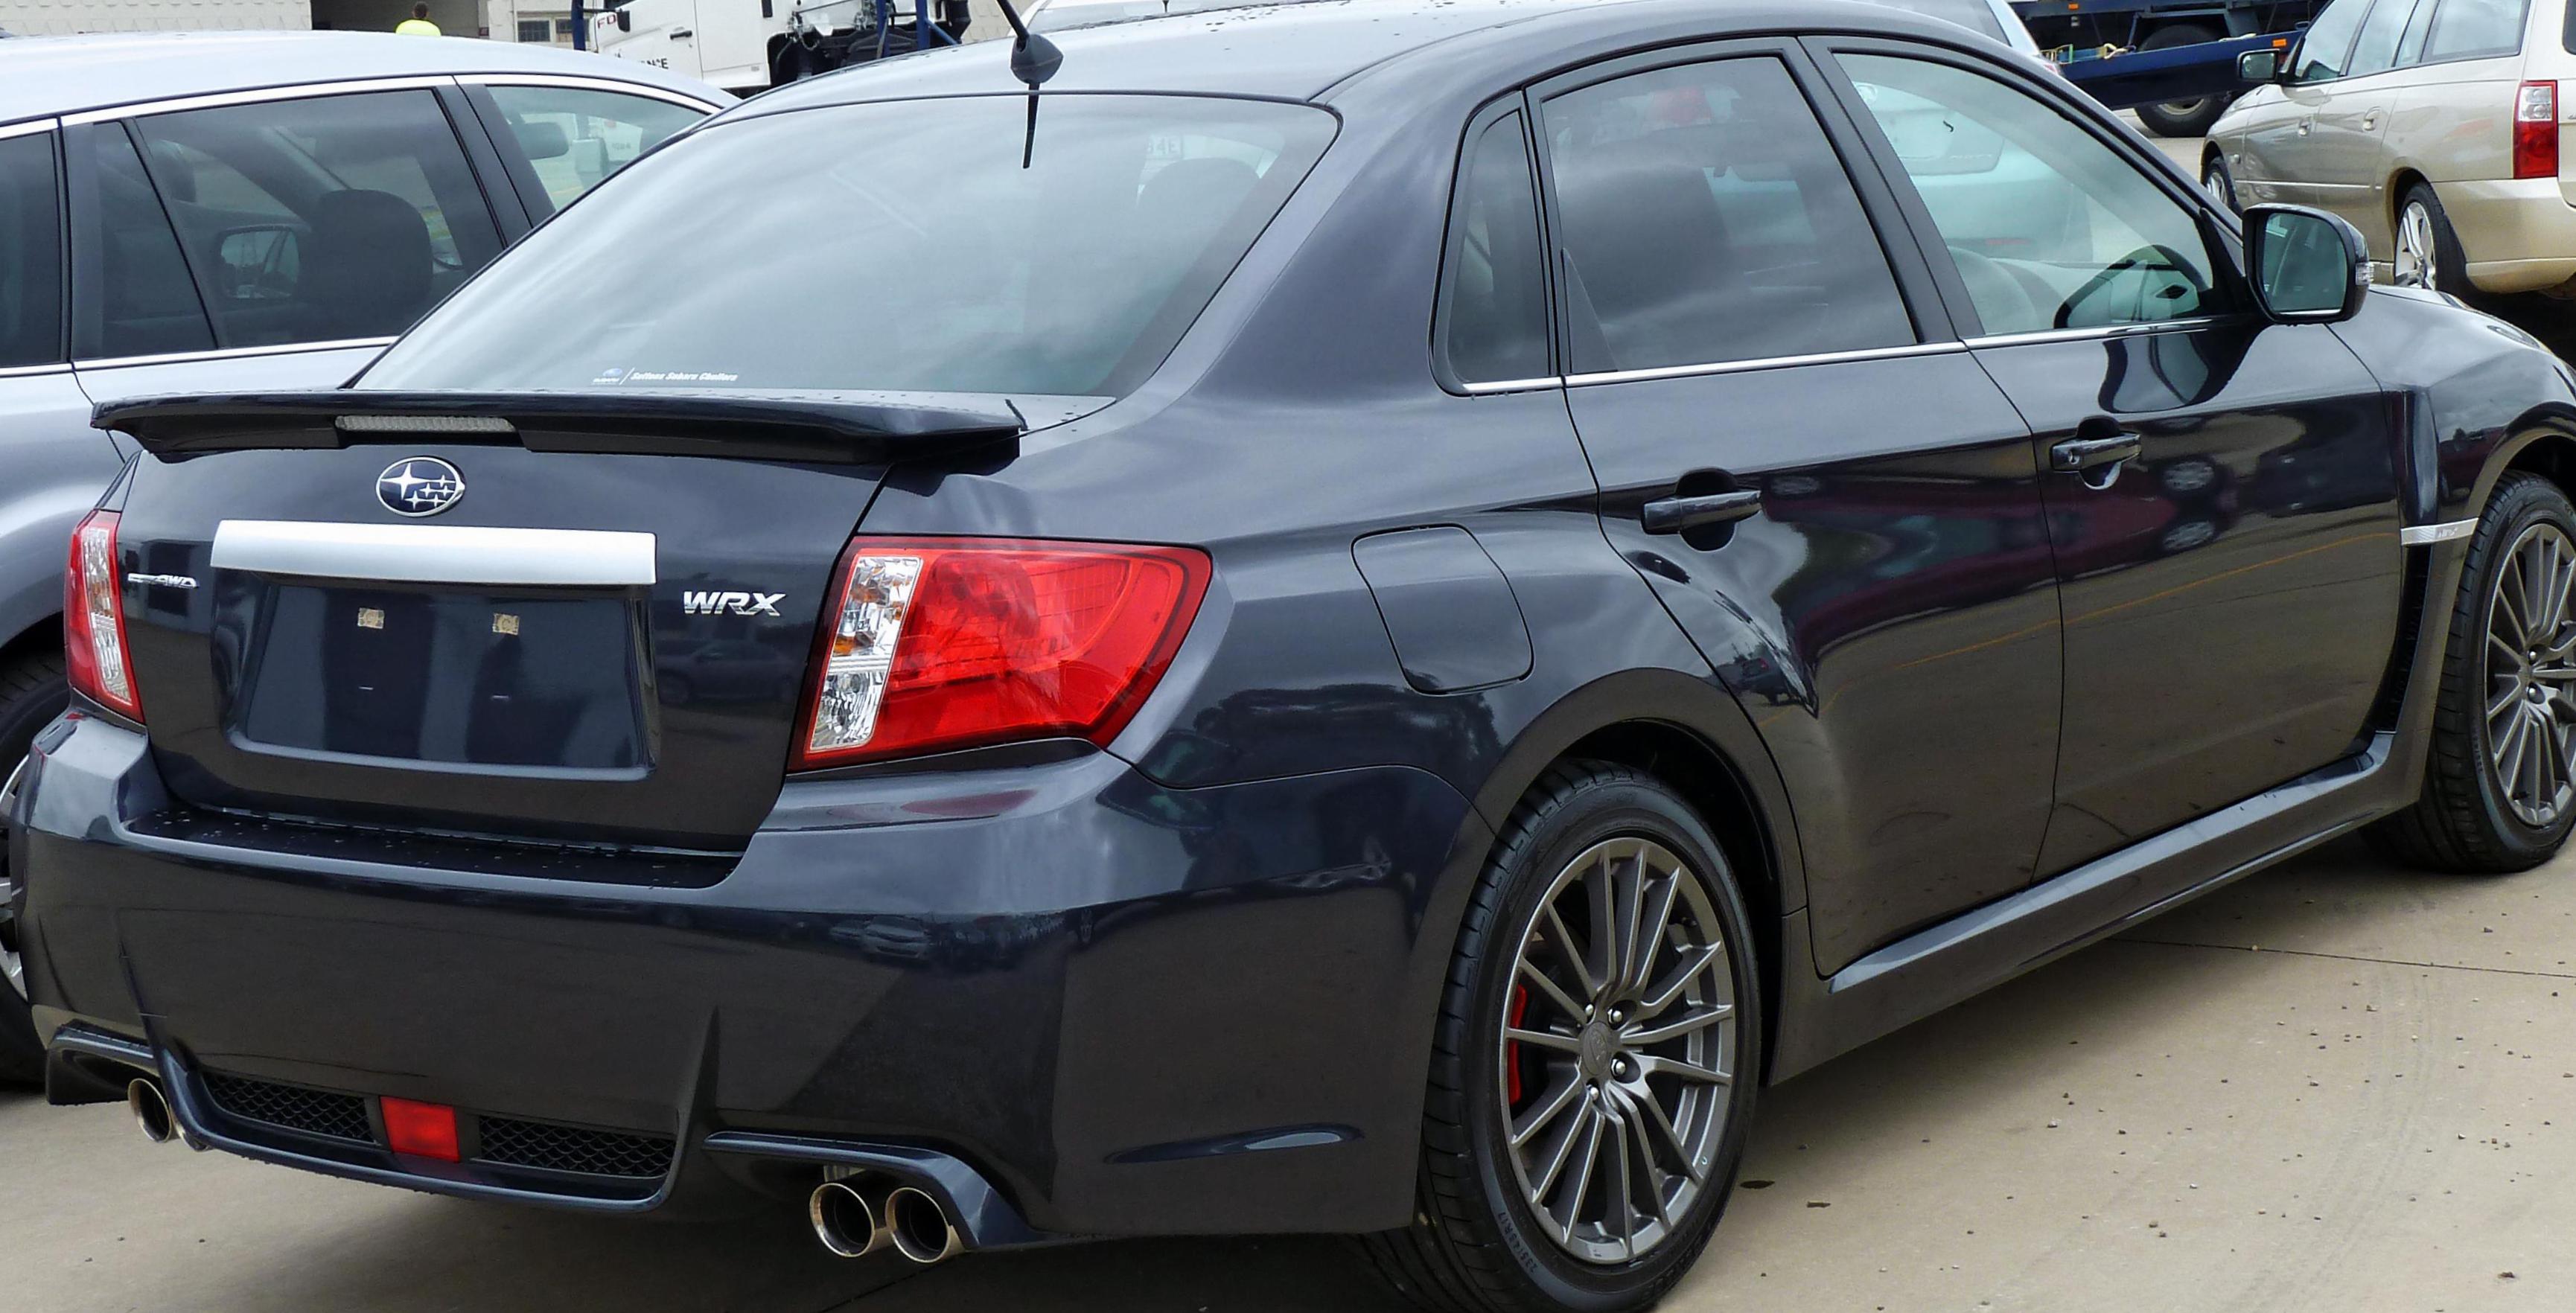 Impreza WRX Subaru review 2014